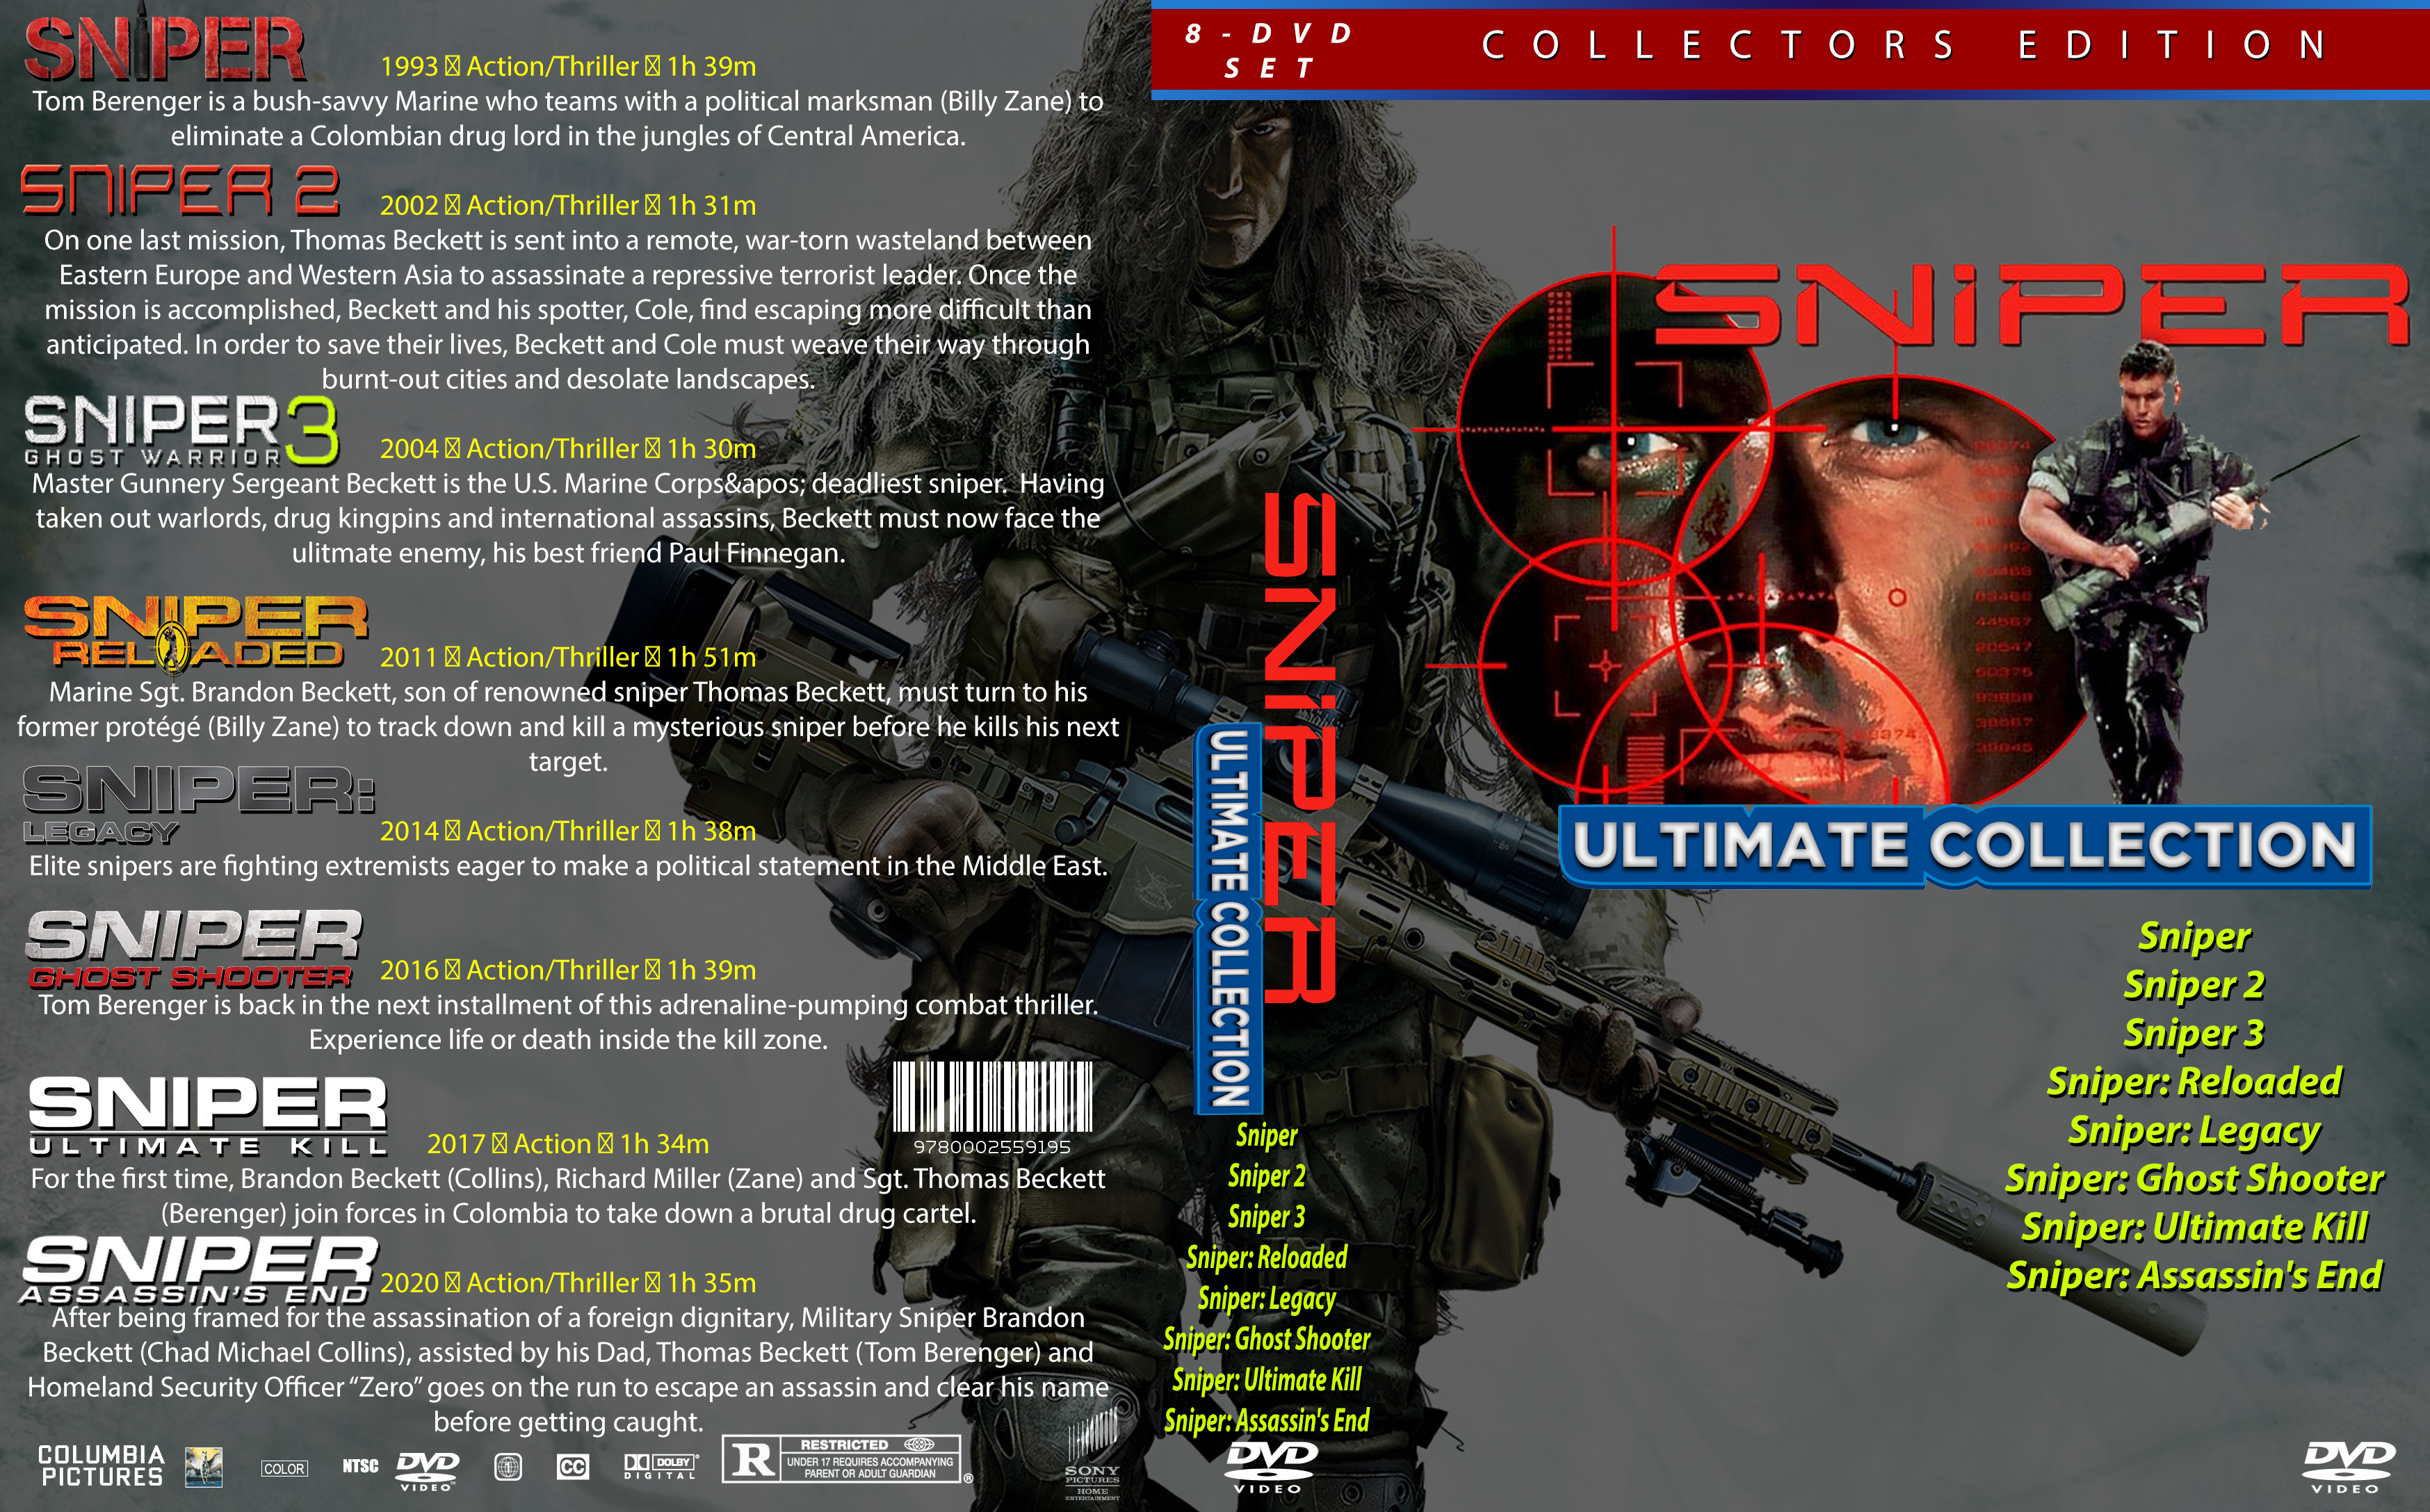 Sniper killed. Снайпер ультиматум. Ultimate Rifleman. Партизан 2020 DVD Cover. Ava 2020 DVD Cover.